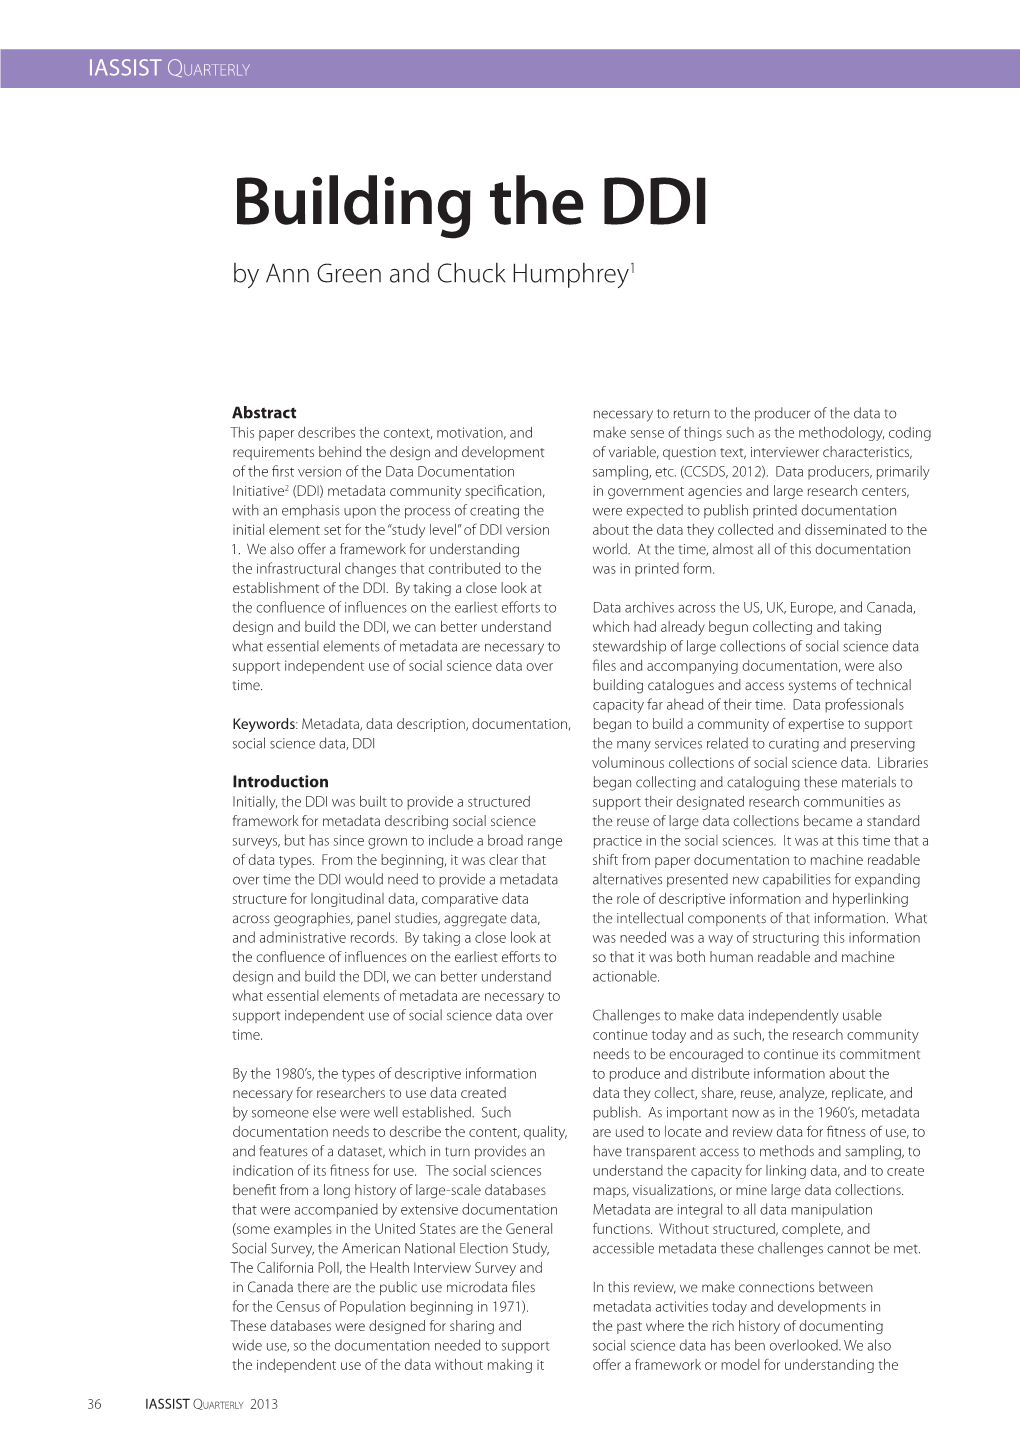 Building the DDI by Ann Green and Chuck Humphrey1